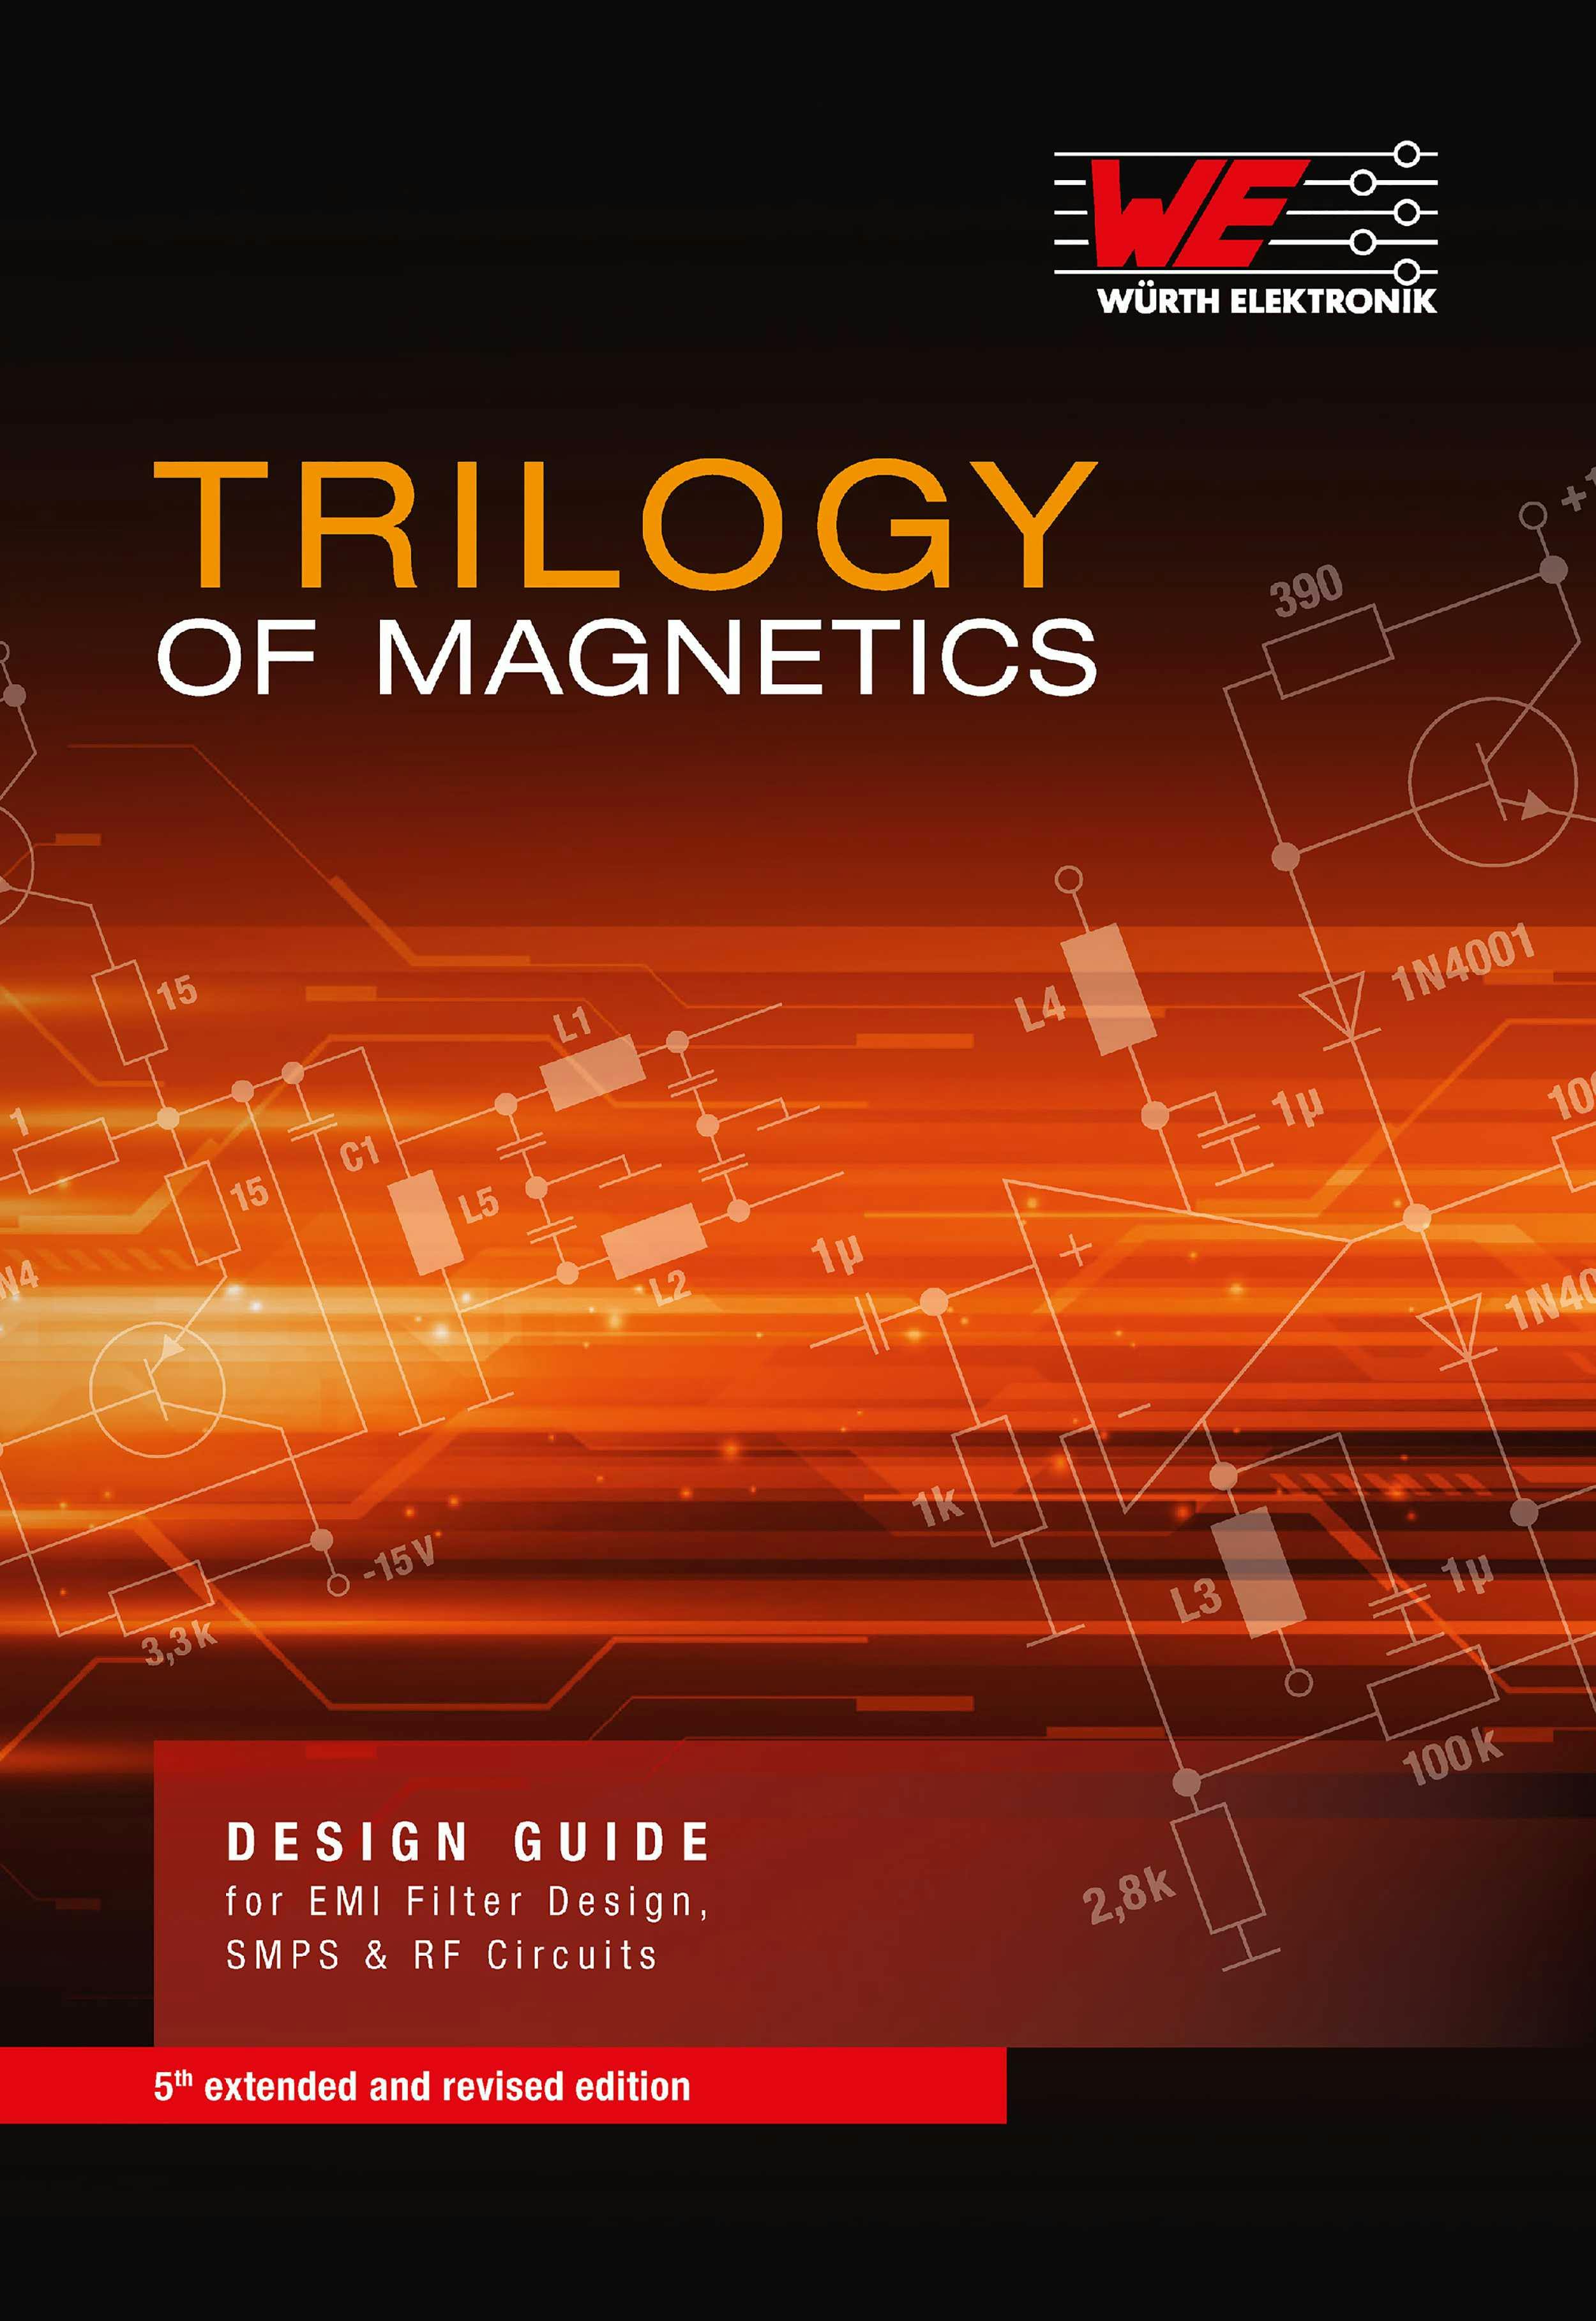 Trilogy of Magnetics - Heinz Zenkner, Bernhard Rall, Thomas Brander, Alexander Gerfer